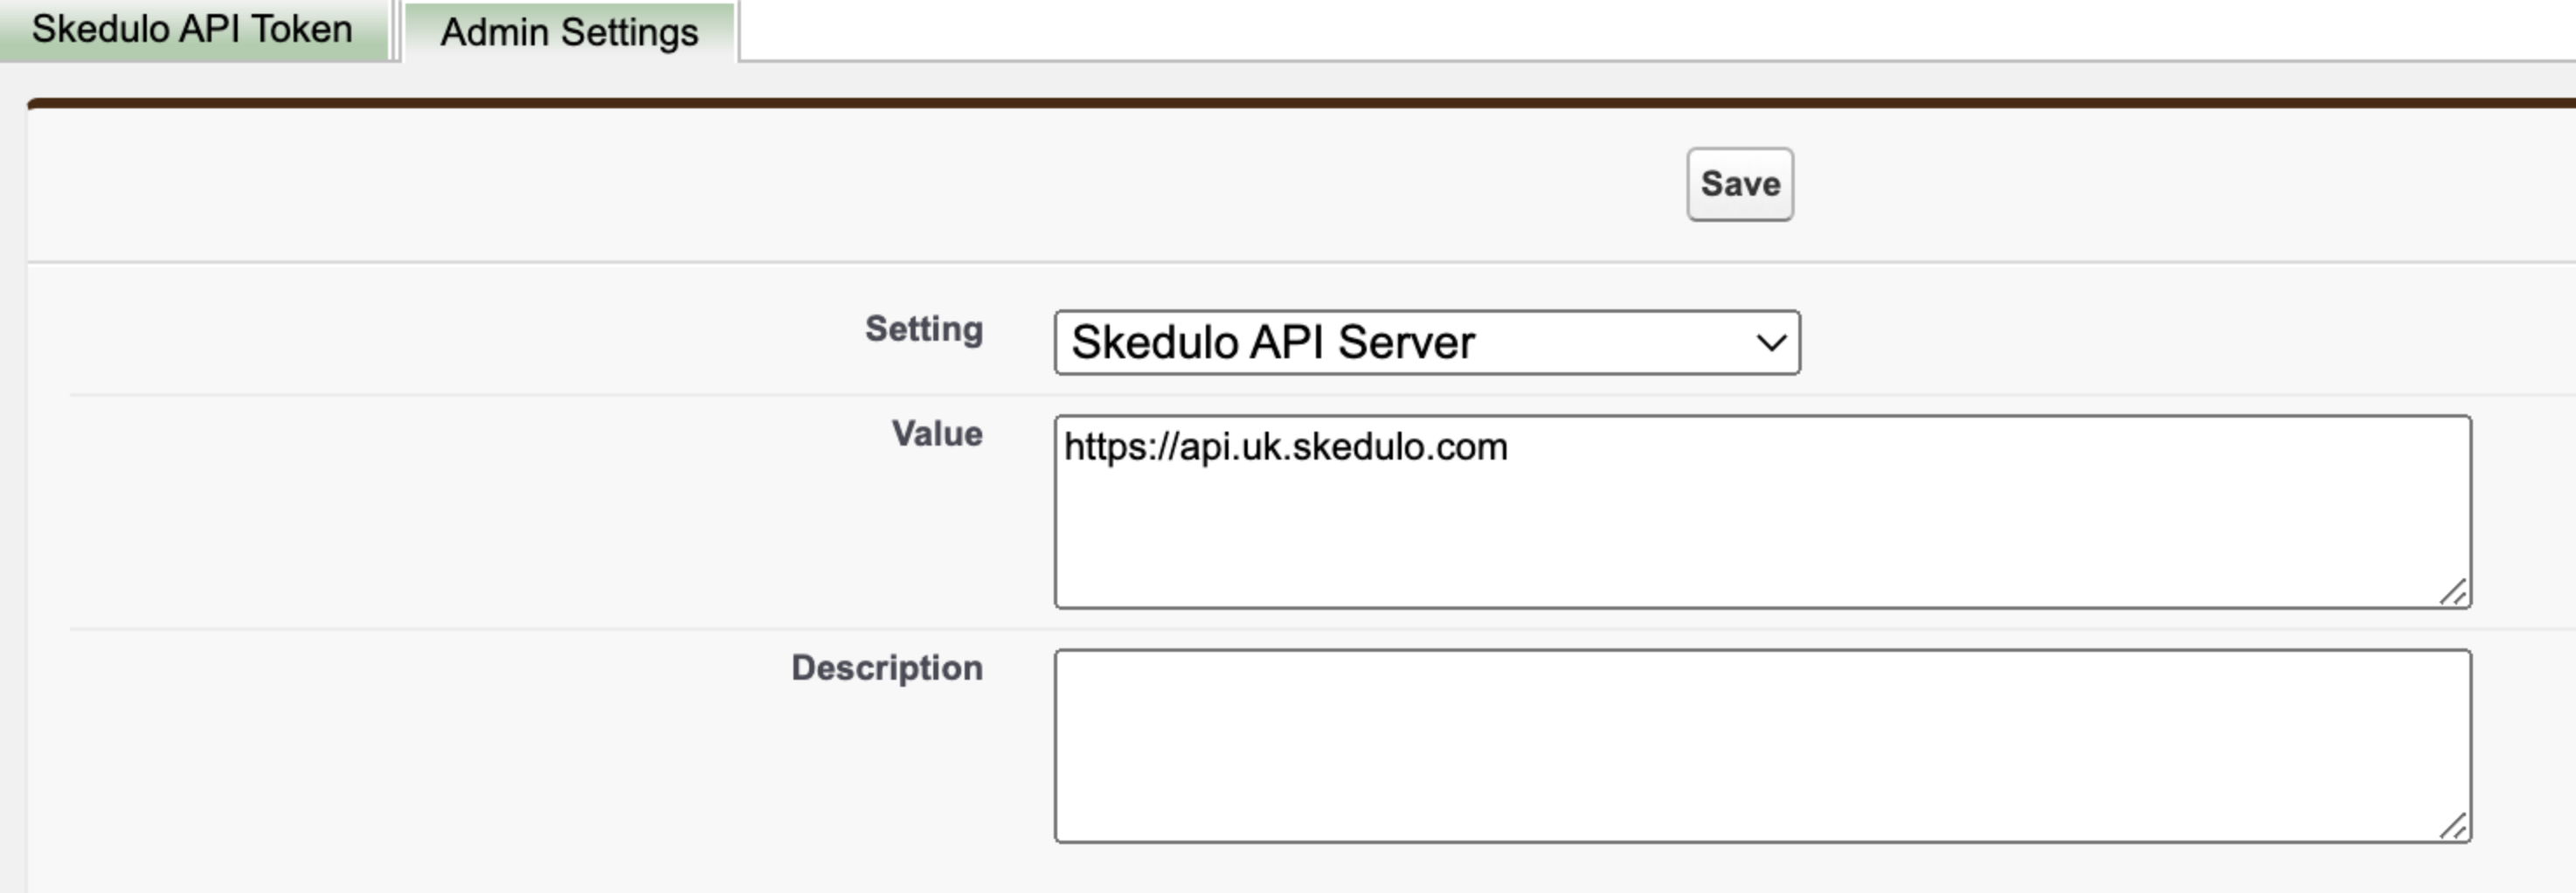 Screenshot of the Salesforce Admin Settings tab for the Skedulo API token